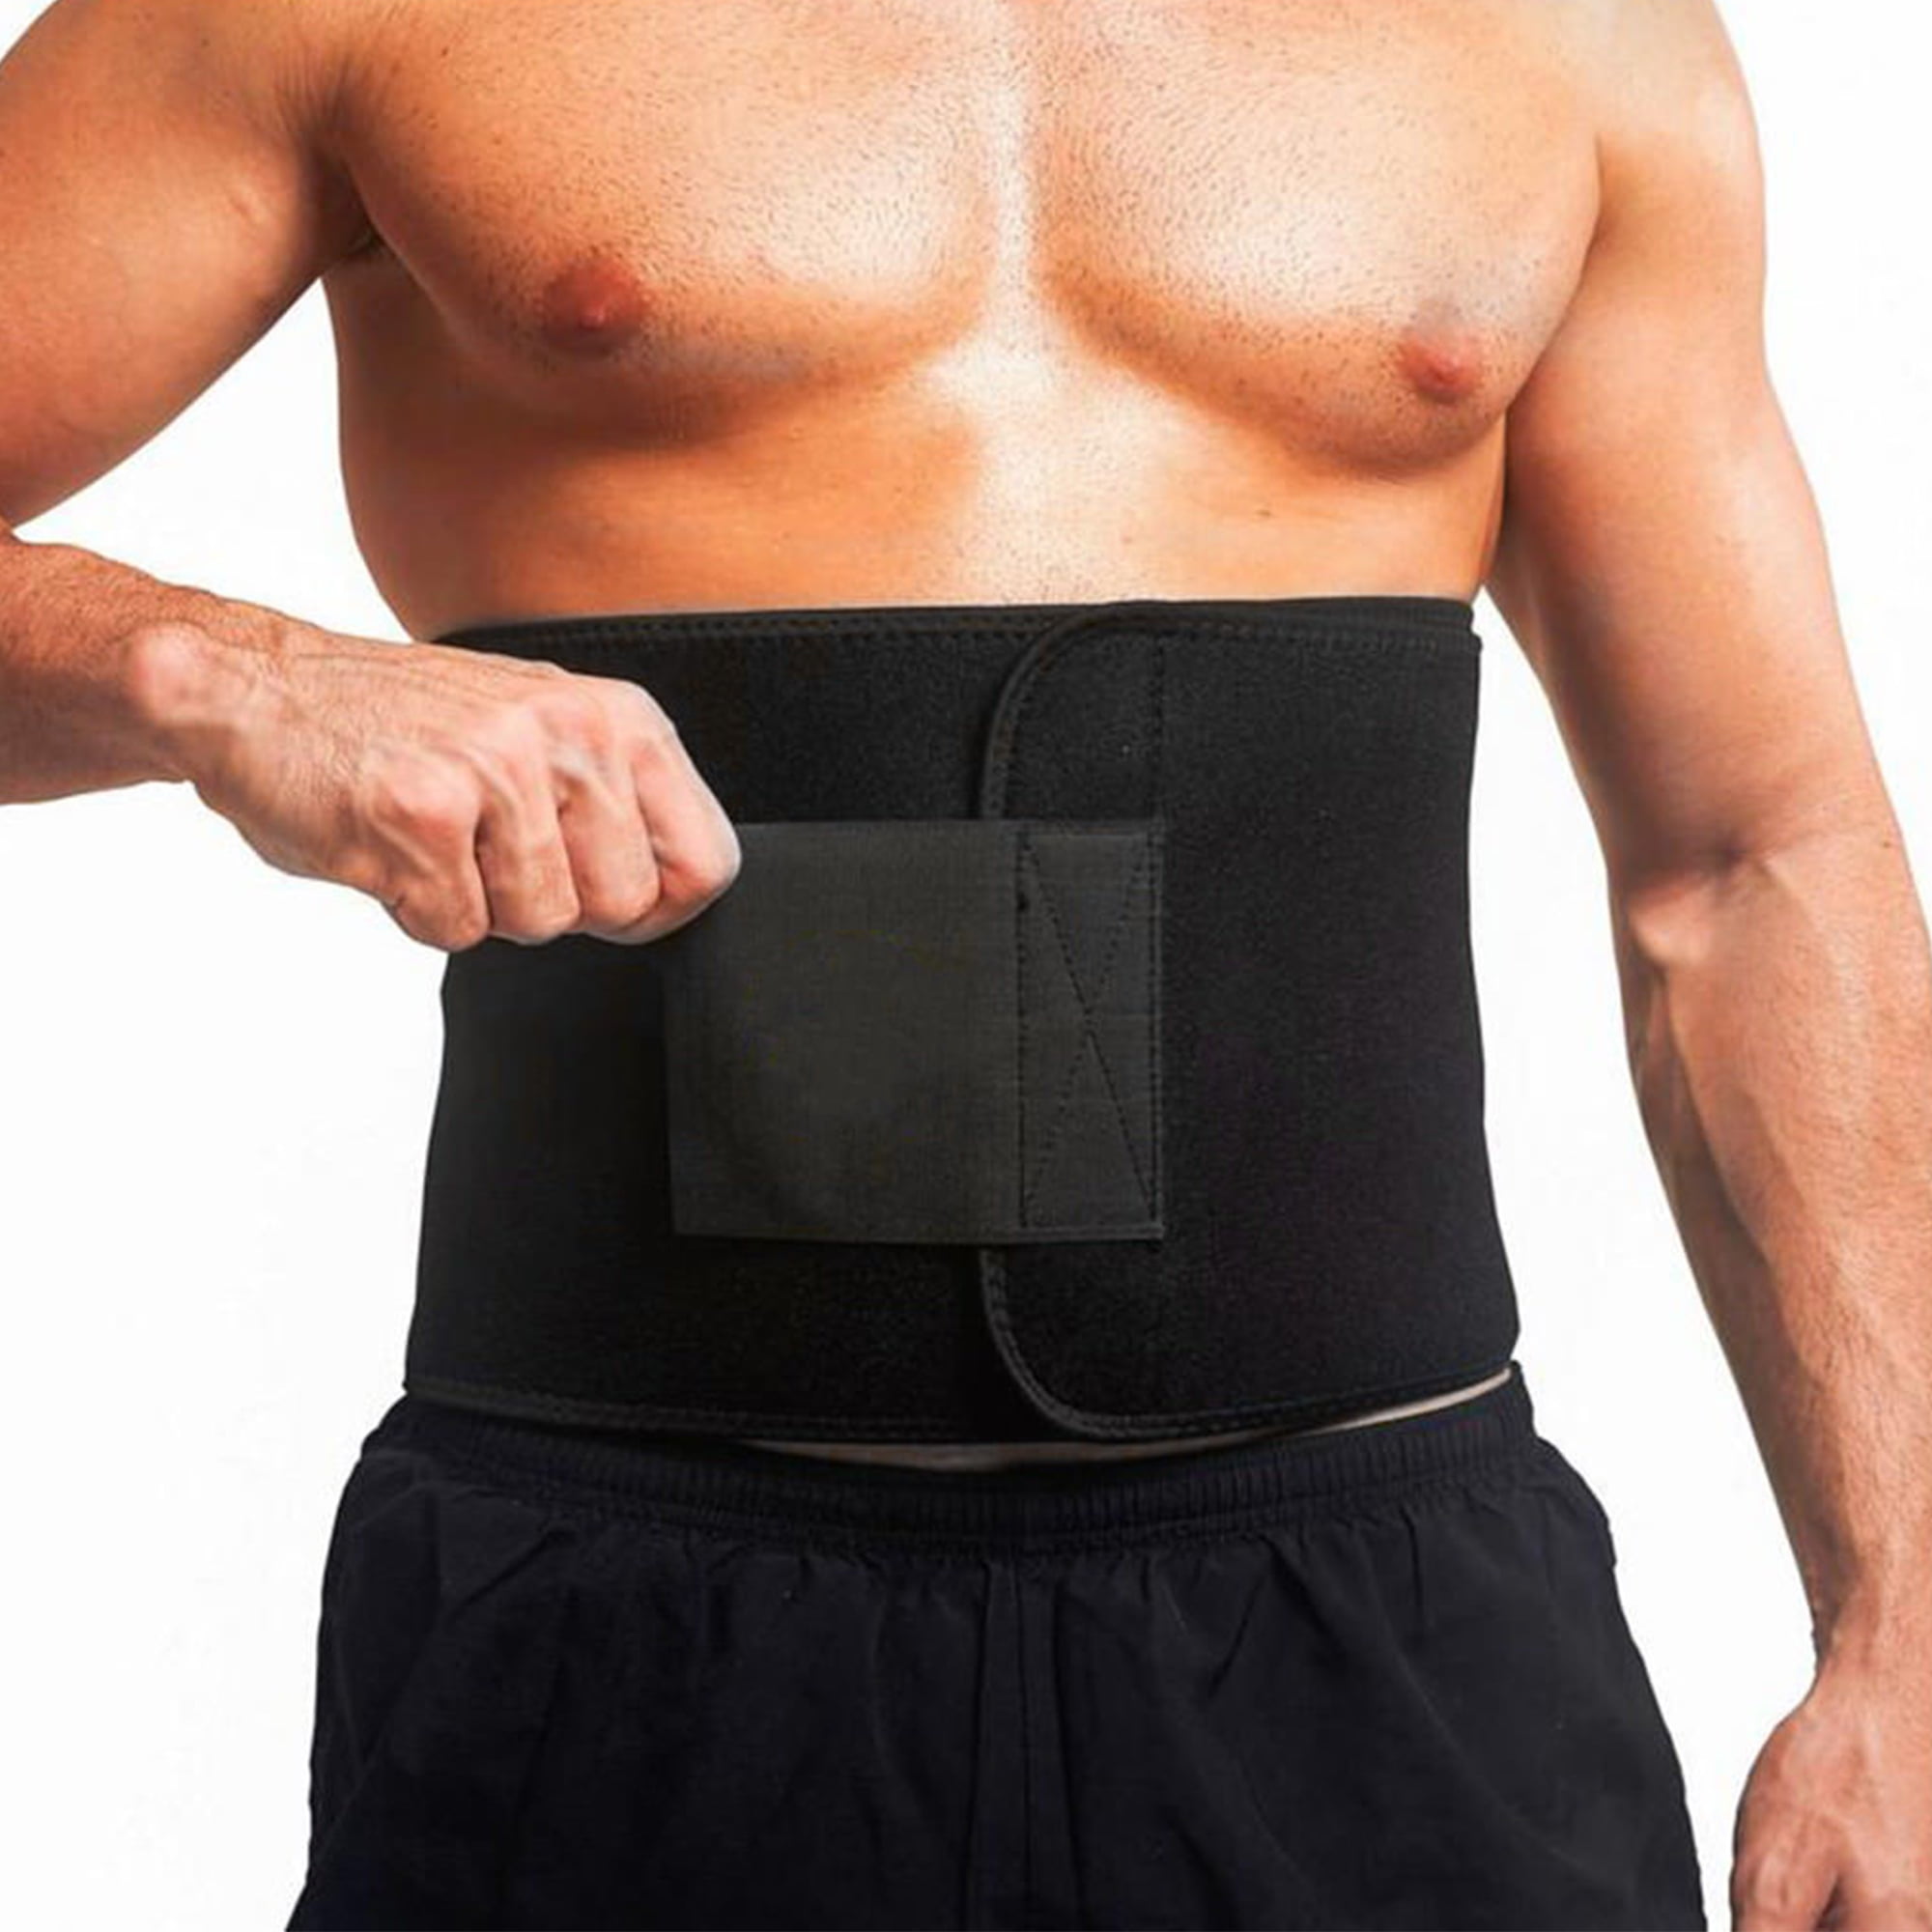 HBT GEAR Waist Trimmer Body Shaper Belly Slimming Ab Training Belt Fat Burner 